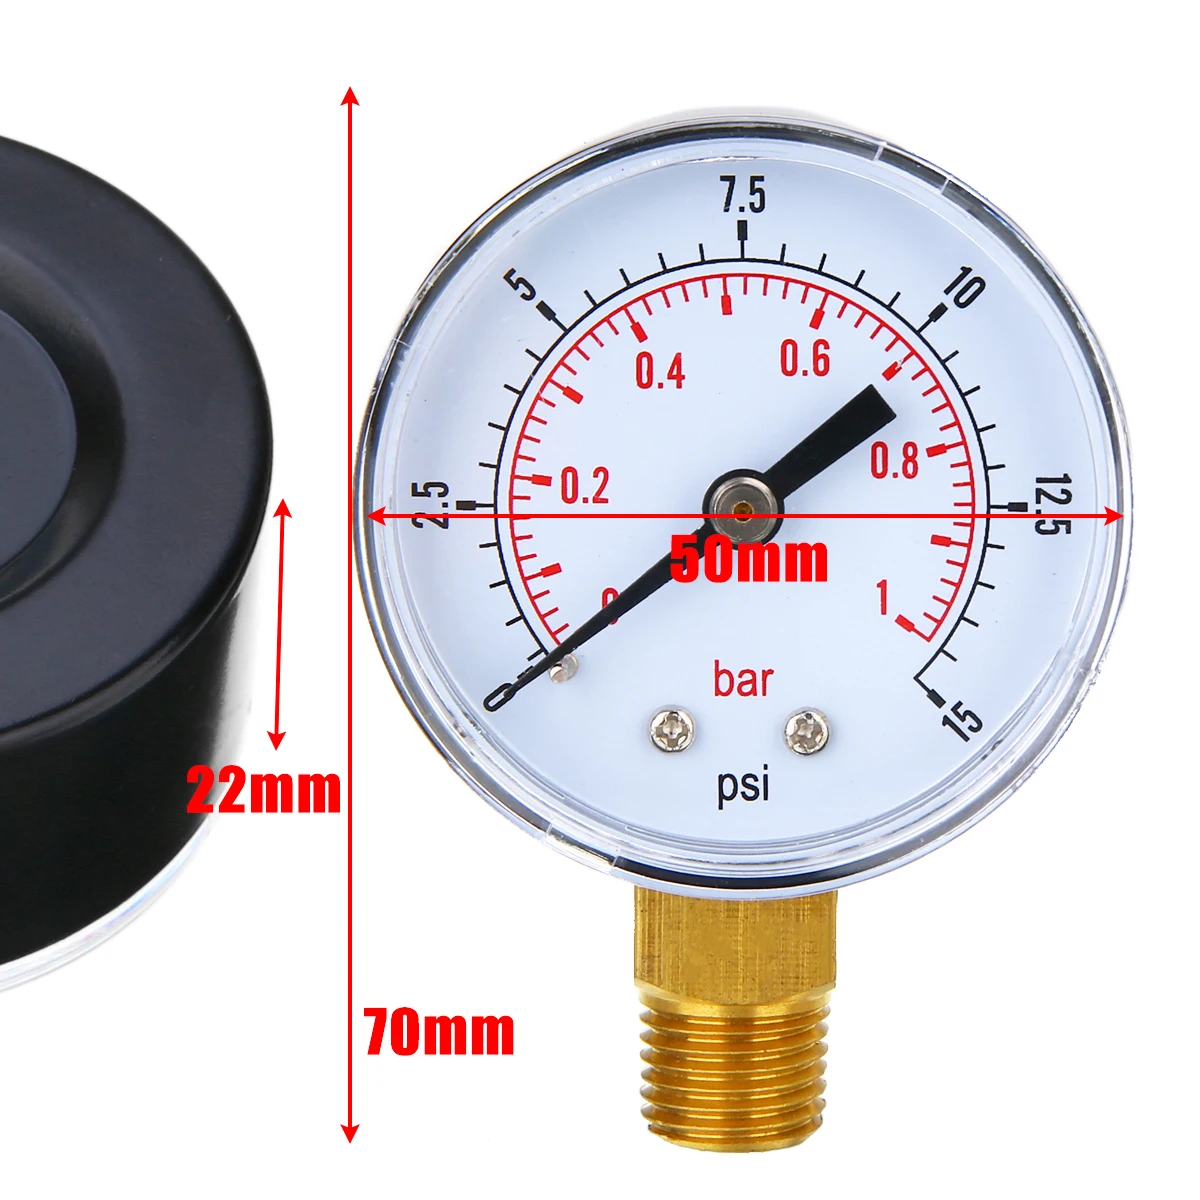 50mm Dial1/4 BSPT Brass Axial Pressure Gauge Air Pressure Gauge Back Connection for Air,Water,Oil,Gas 0-15psi 0-1bar Pressure Gauge